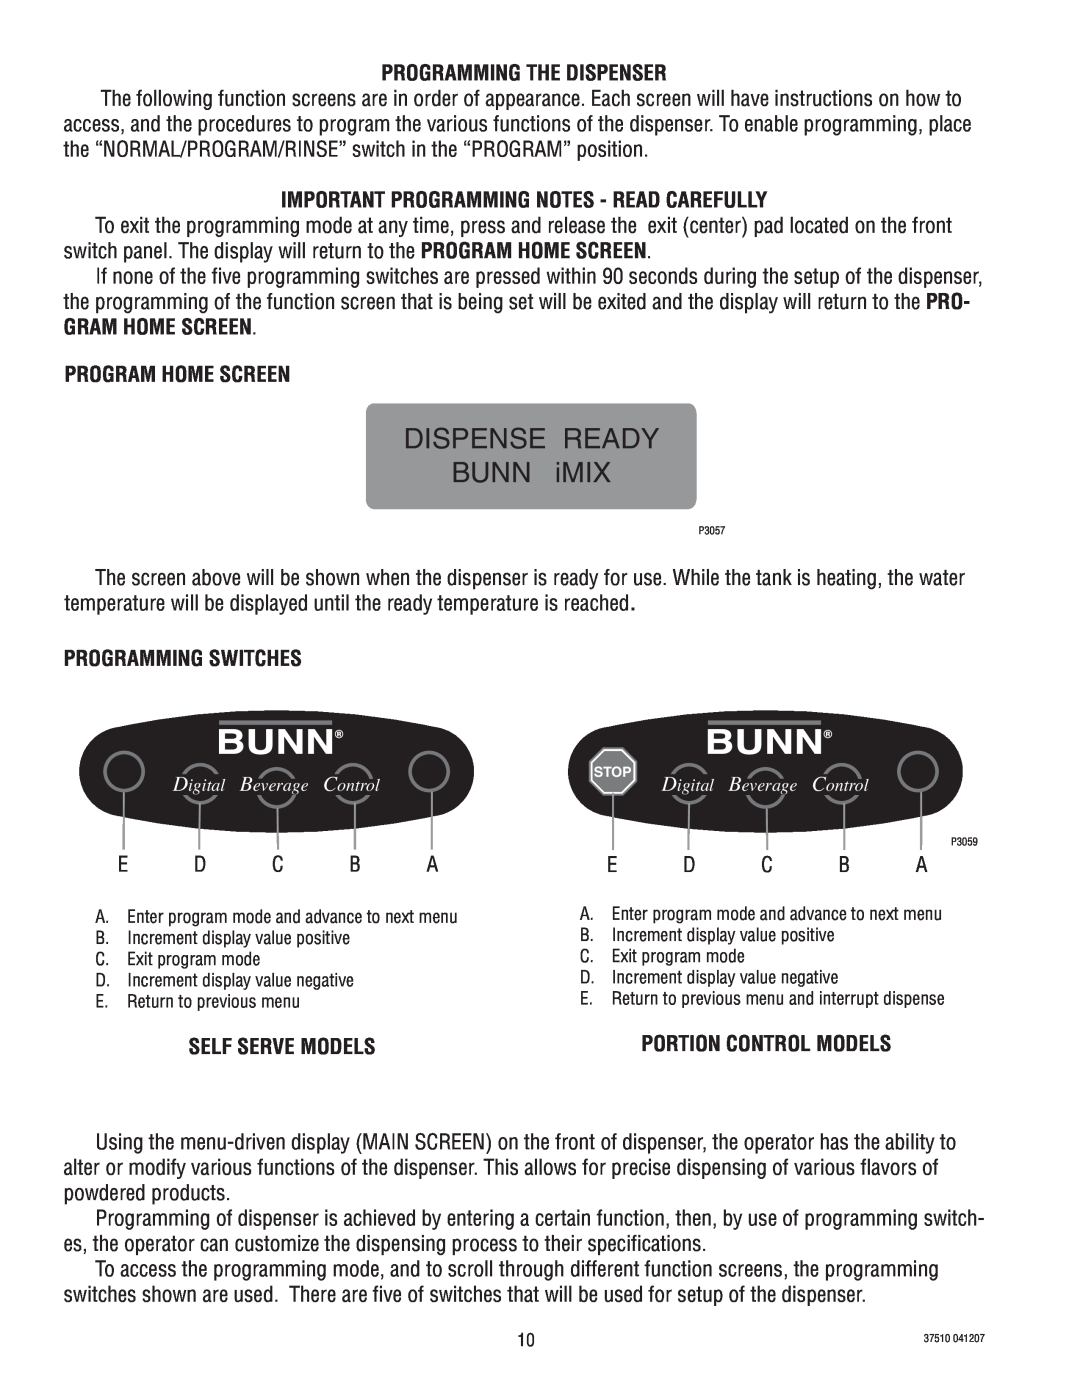 Bunn IMIX-5 Programming The Dispenser, Important Programming Notes - Read Carefully, Gram Home Screen Program Home Screen 